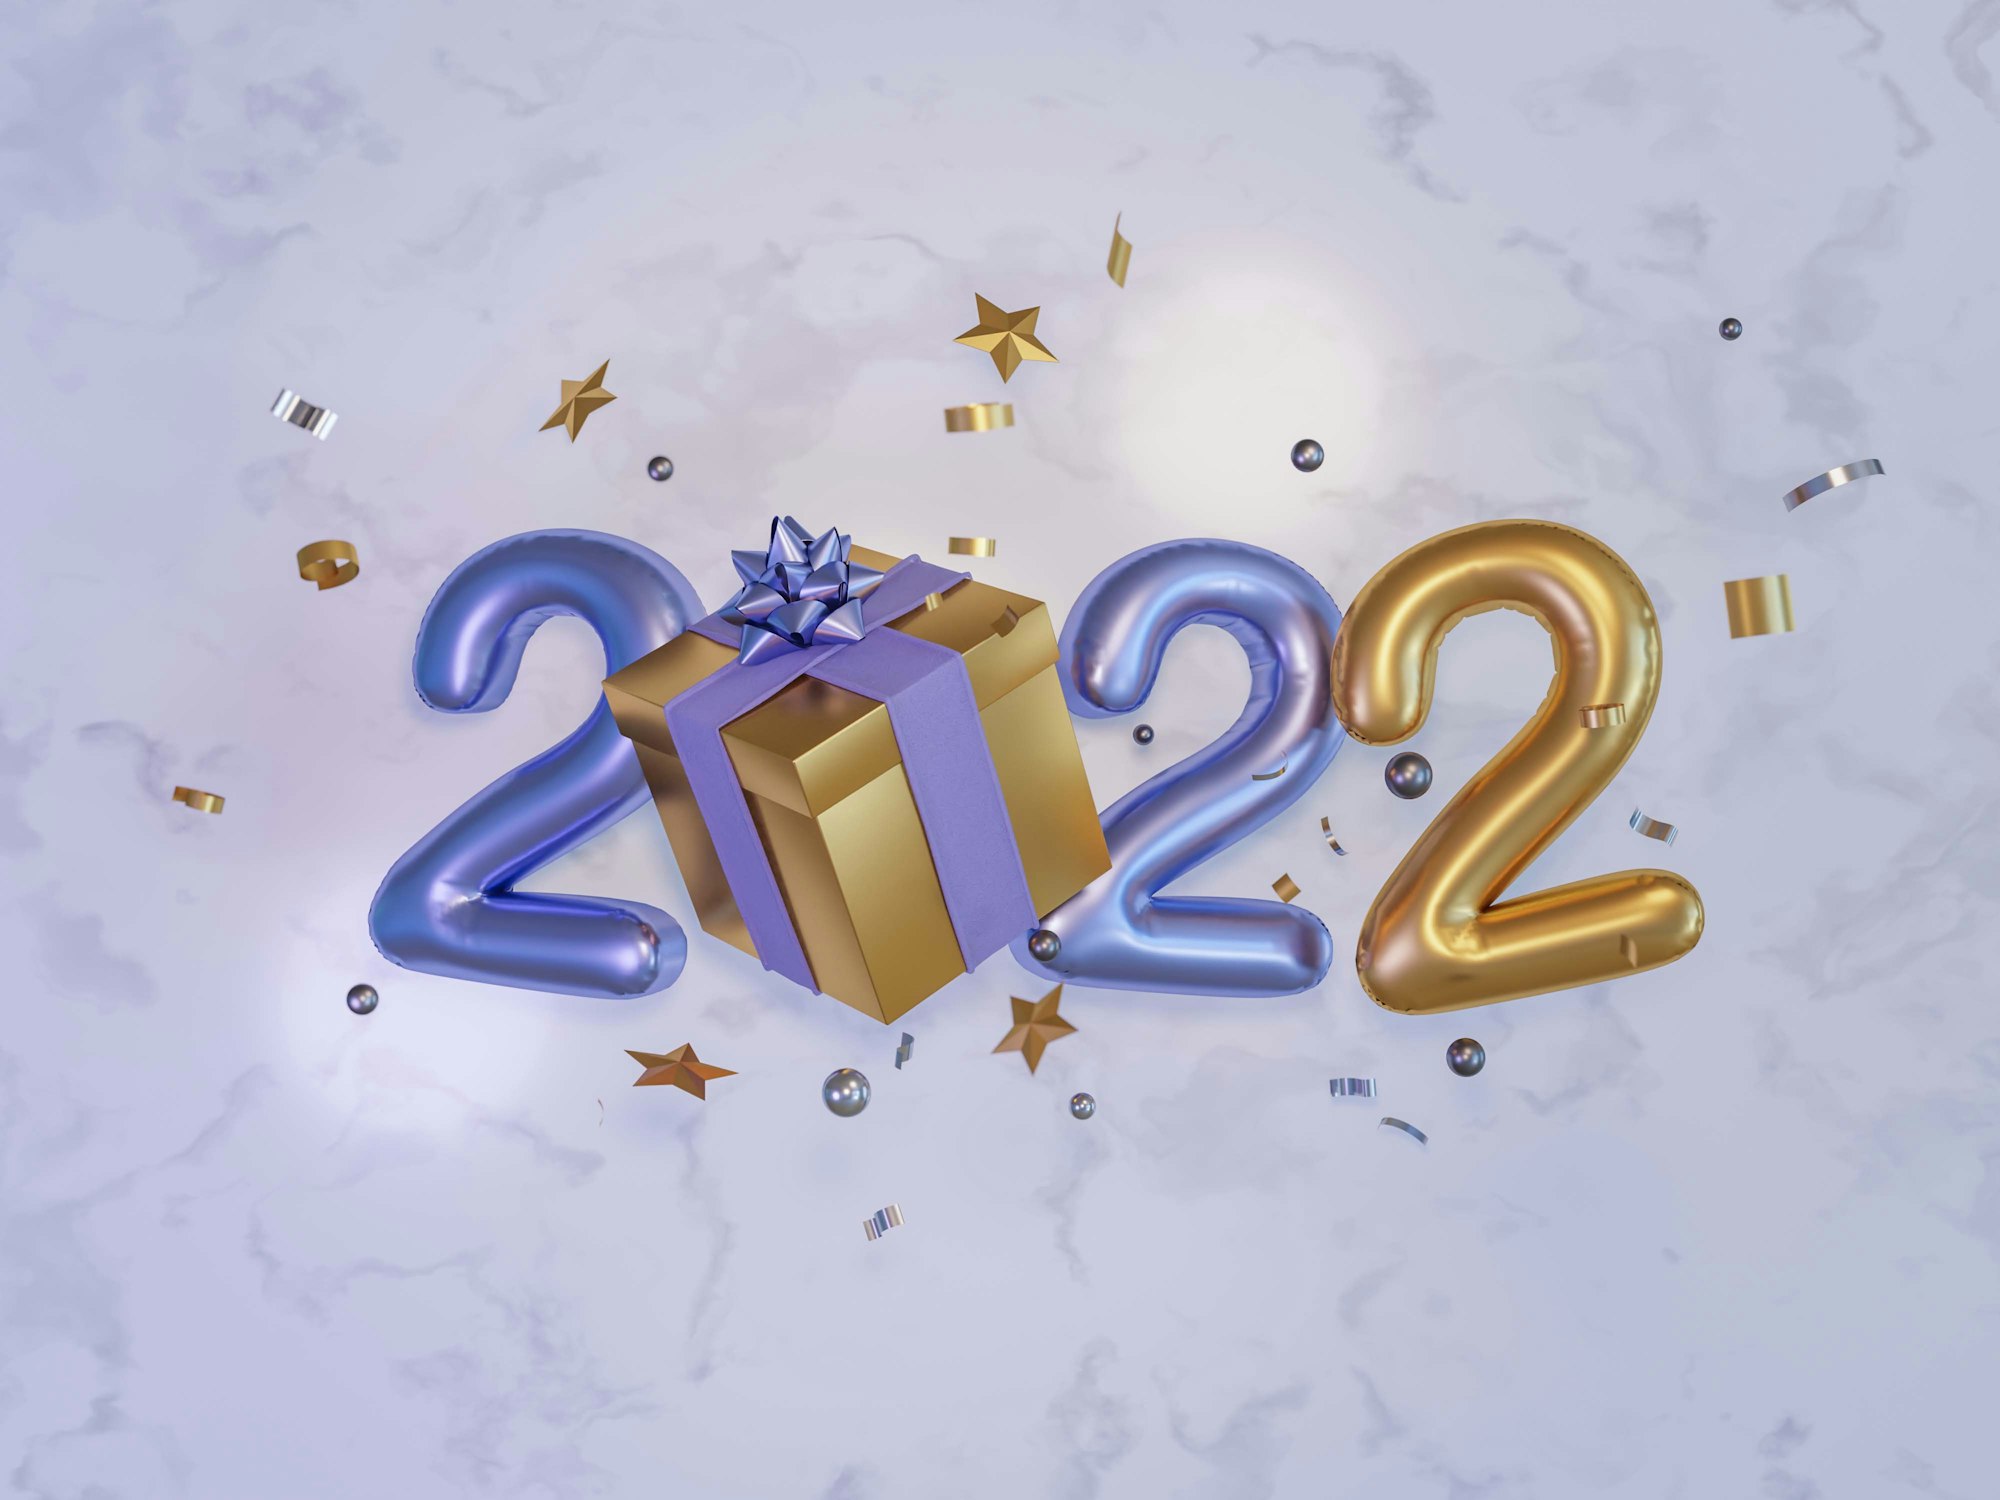 Happy New Year! It's 2022!